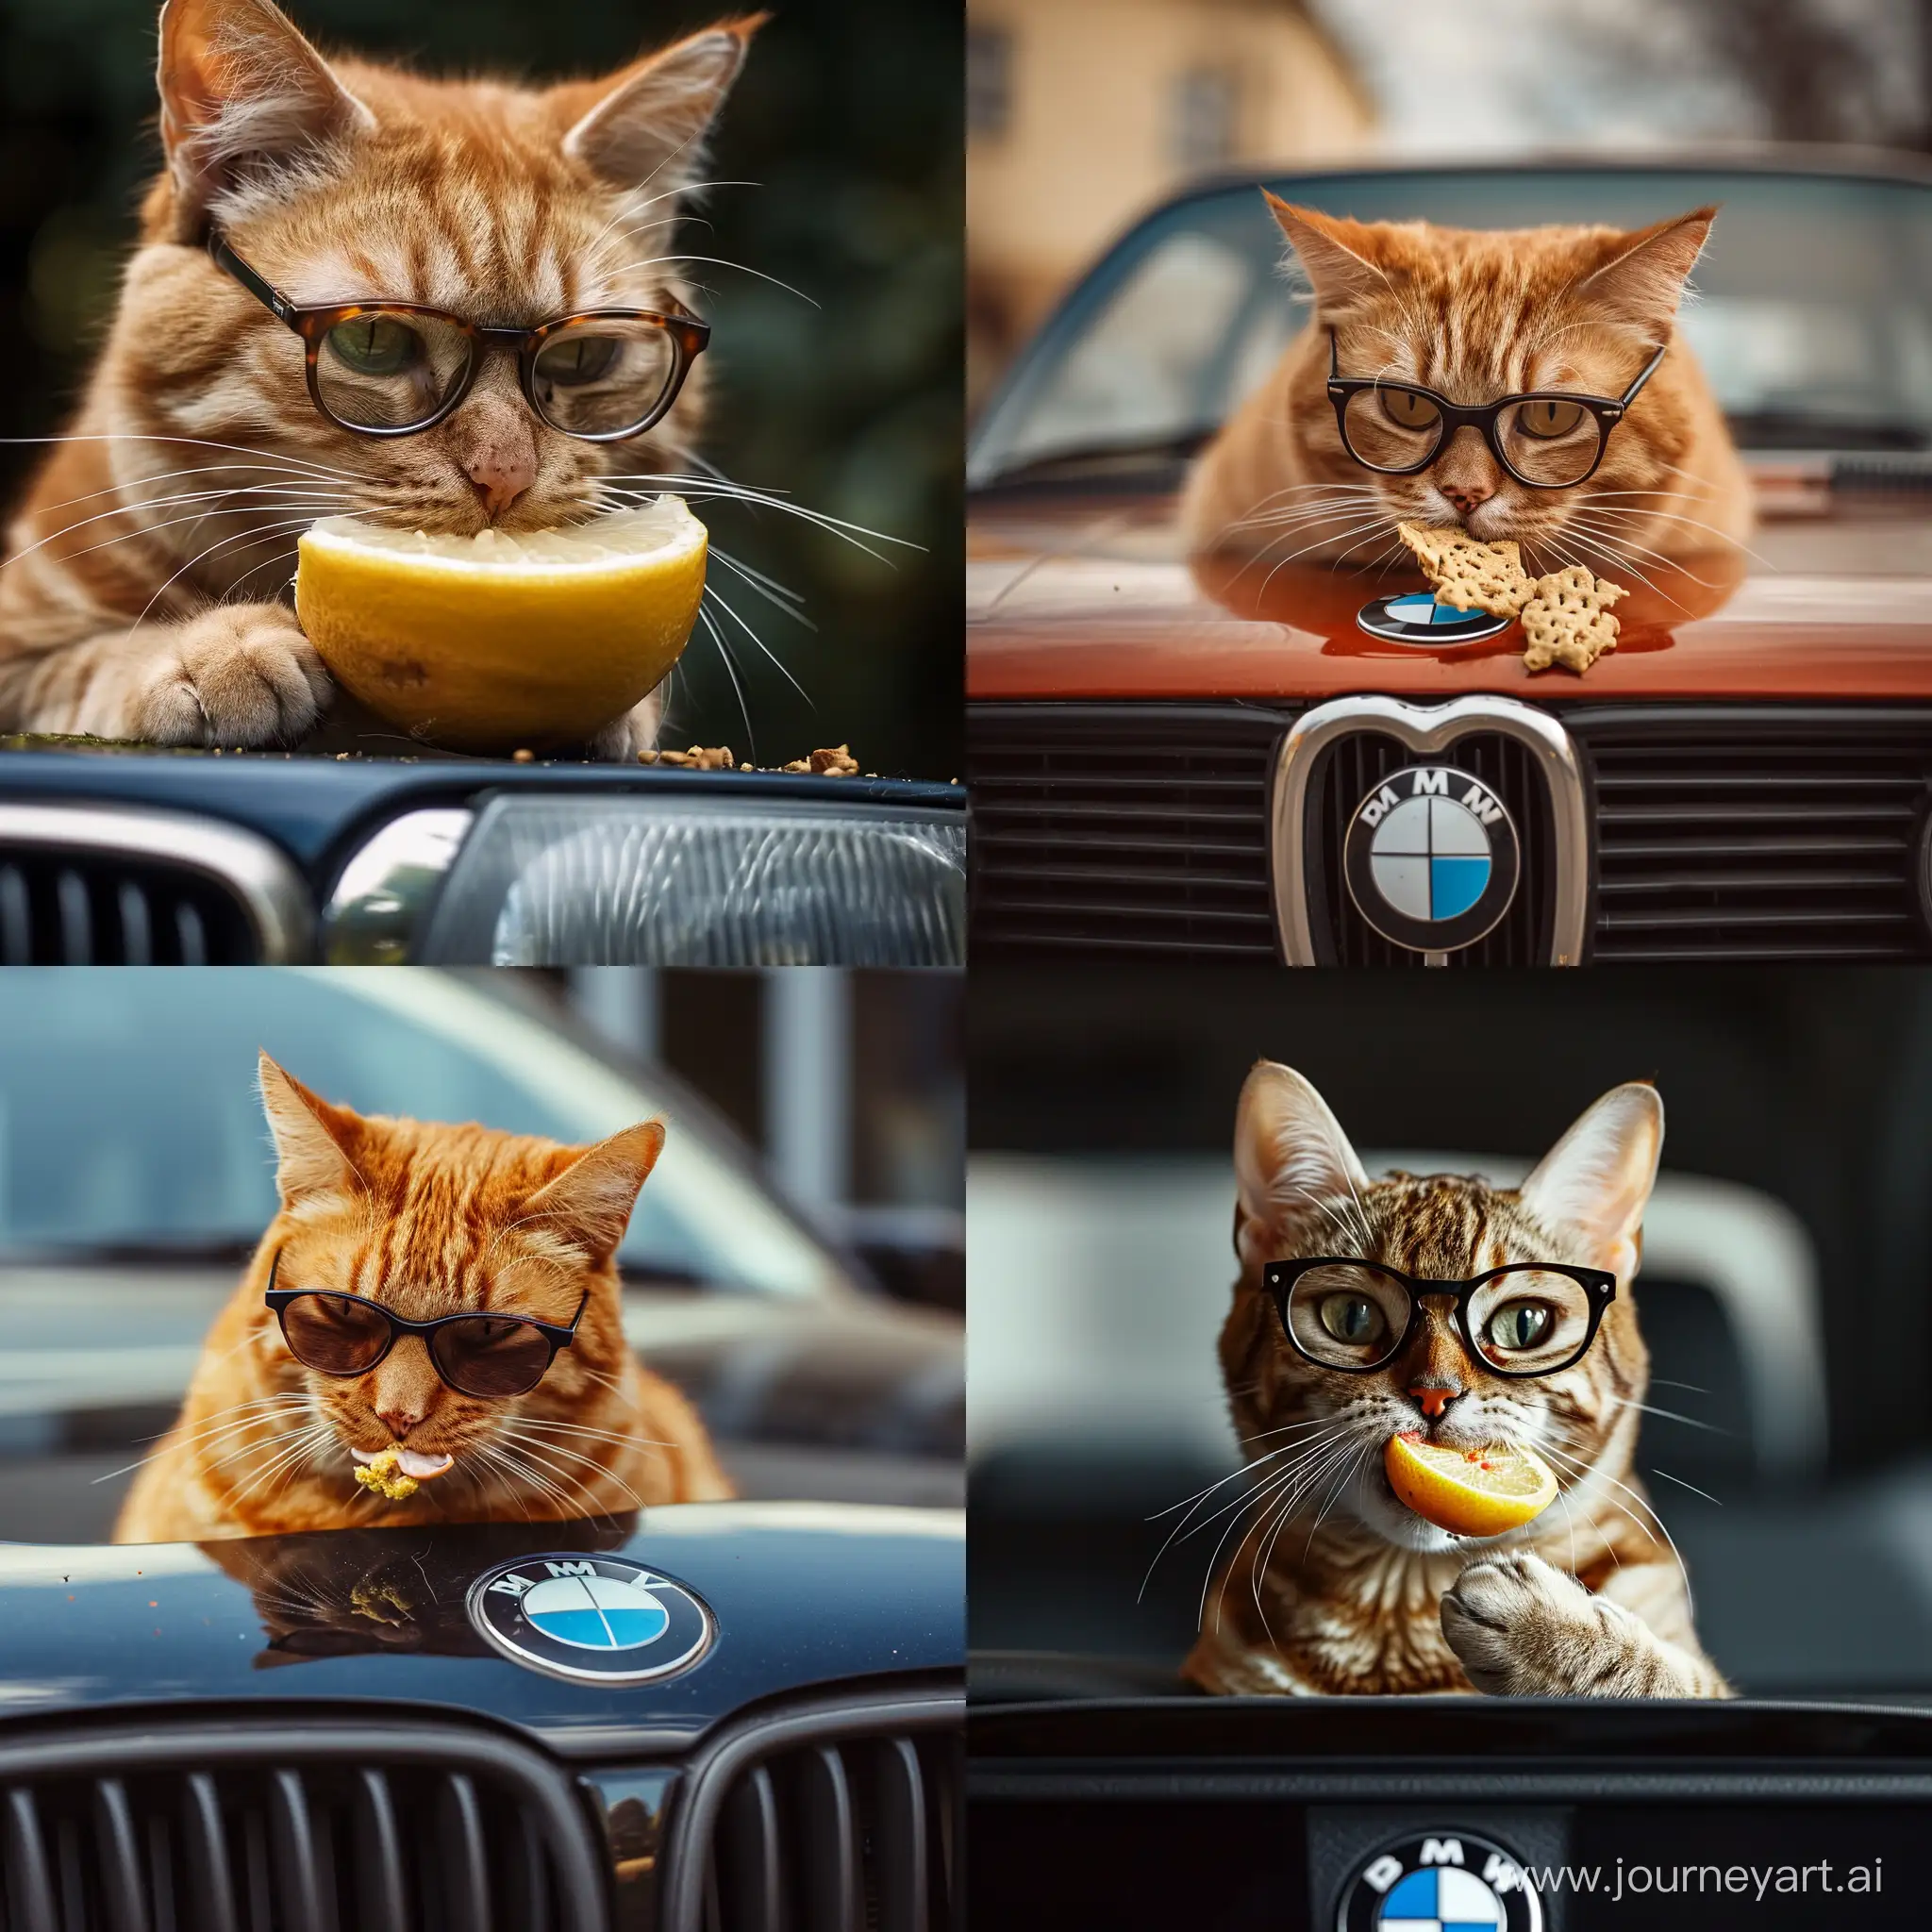 Stylish-Cat-Enjoying-a-Gourmet-Meal-on-a-BMW